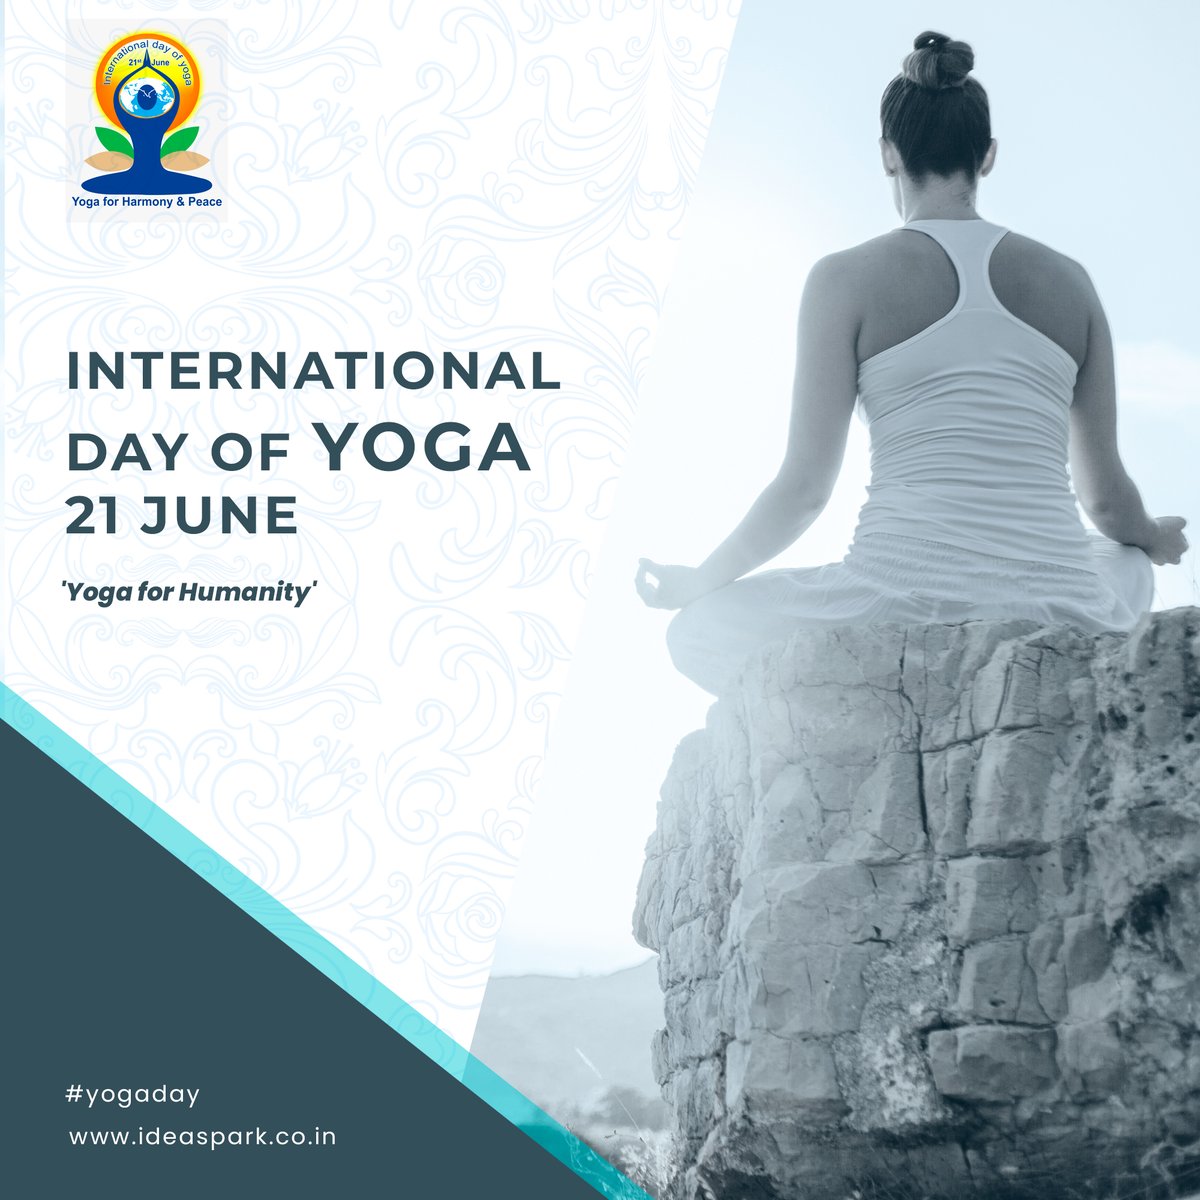 #IdeasPark – The Social Media People
International Day of Yoga 2022
'Yoga for Humanity'
#IDY #IDY2022 
#InternationalYogaDay2020, #InternationalYogaDay, #YogaDay2020, #YogaDay, #MyLifeMyYoga, #योगदिवस  #अंतर्राष्ट्रीययोगदिवस
ideaspark.co.in
linkedin.com/company/ideasp…